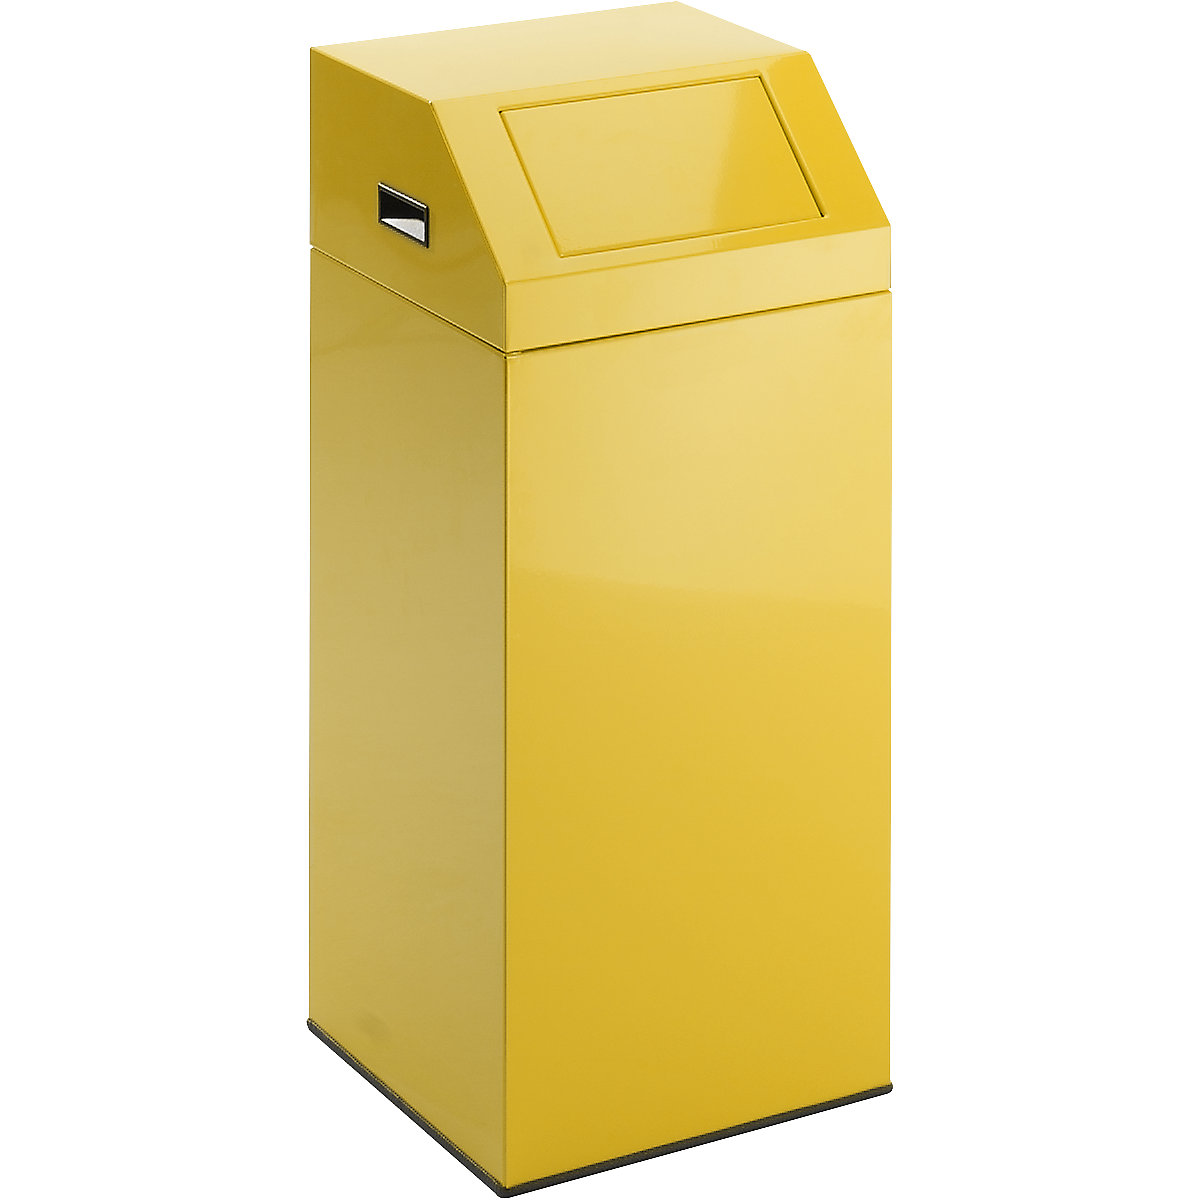 Coletor de materiais recicláveis – eurokraft pro, volume 76 l, LxAxP 380 x 890 x 380 mm, amarelo trânsito-5